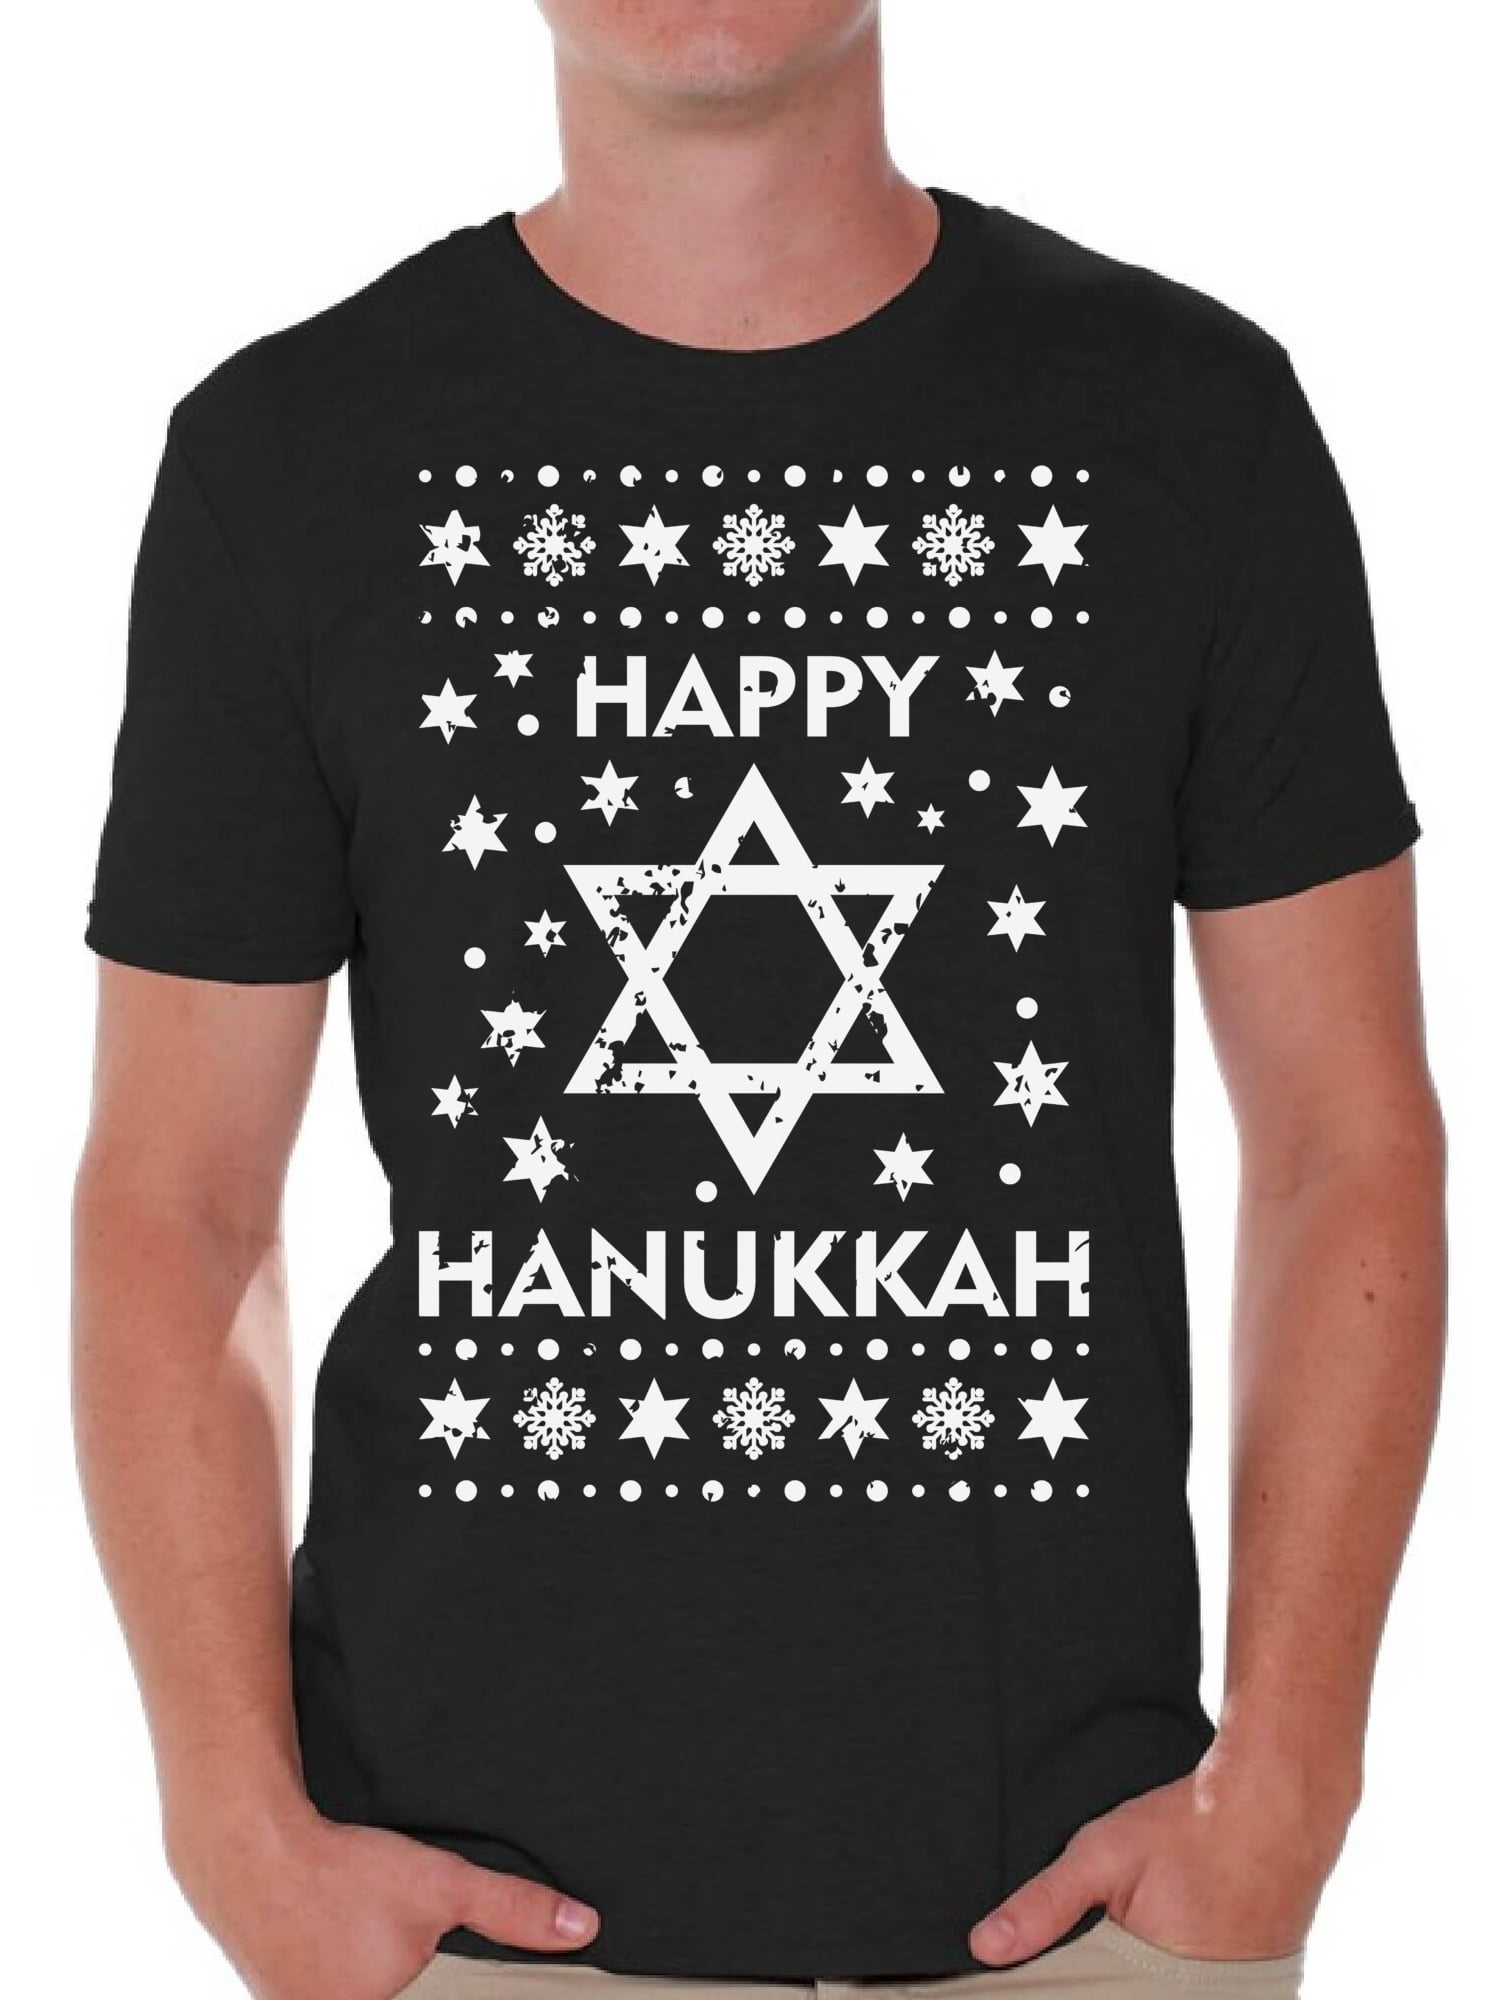 Awkward Styles - Awkward Styles Happy Hanukkah Tshirt Hanukkah Shirts ...